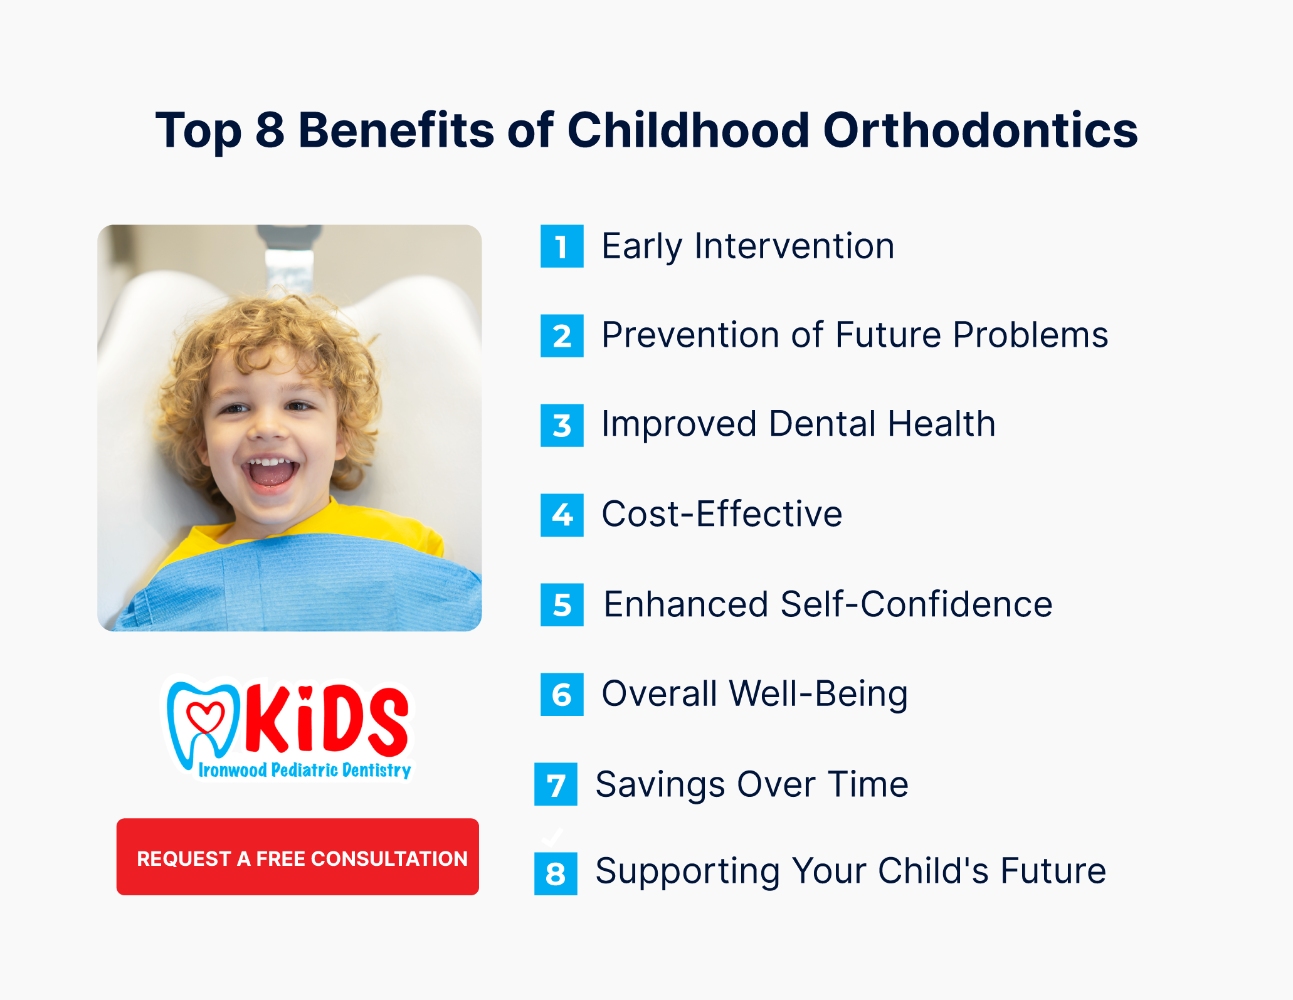 Top 8 benefits of childhood orthodontics